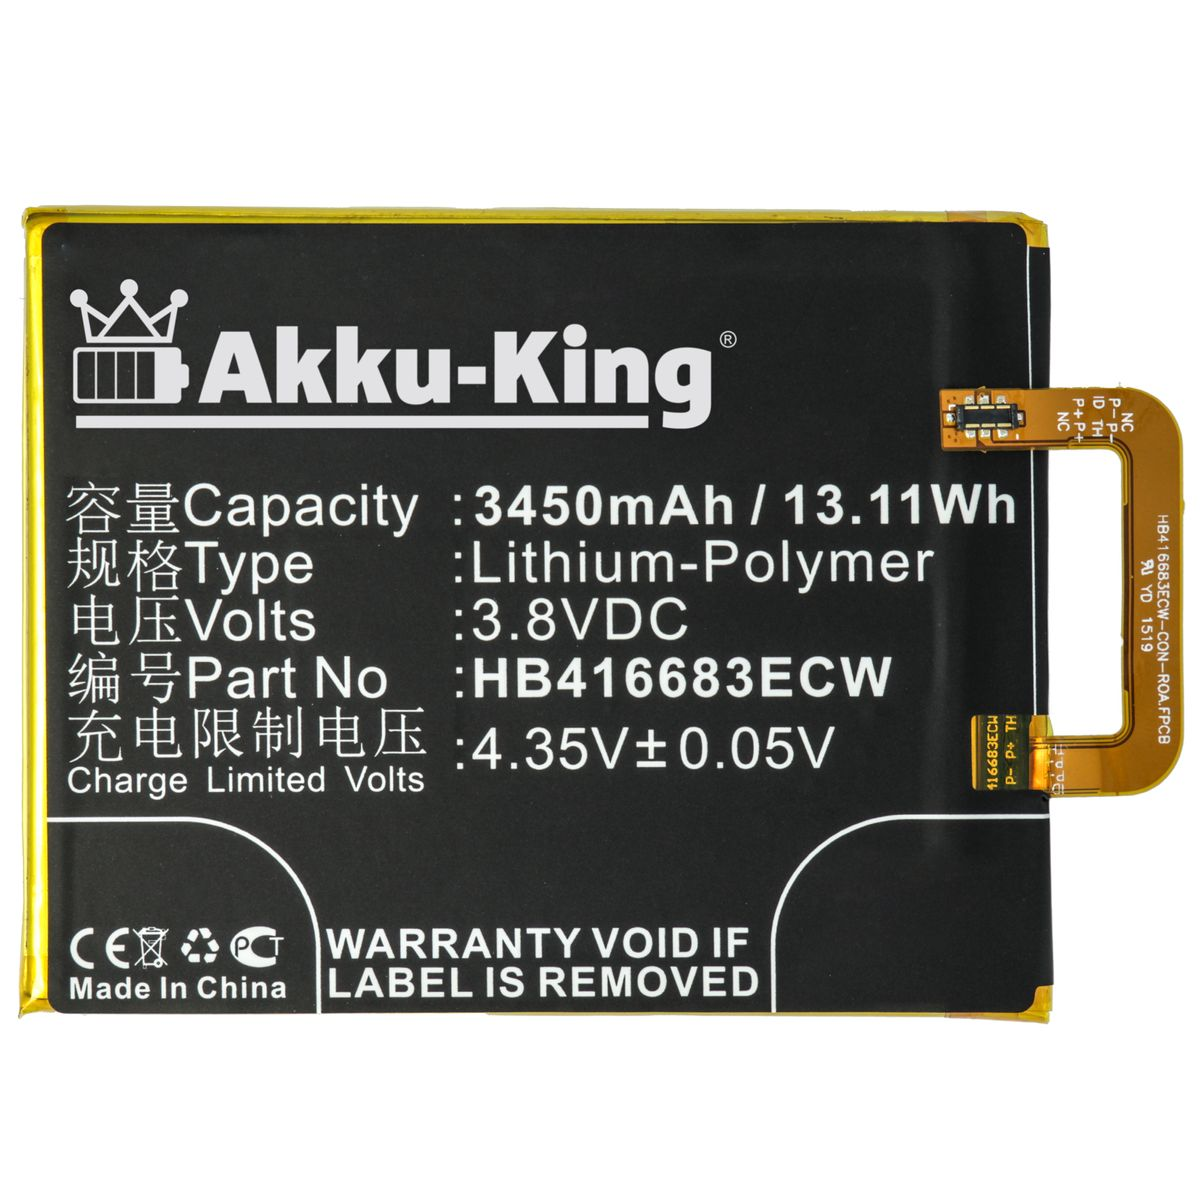 Volt, Handy-Akku, Google Li-Polymer mit Akku AKKU-KING kompatibel 3.8 HB416683ECW 3450mAh